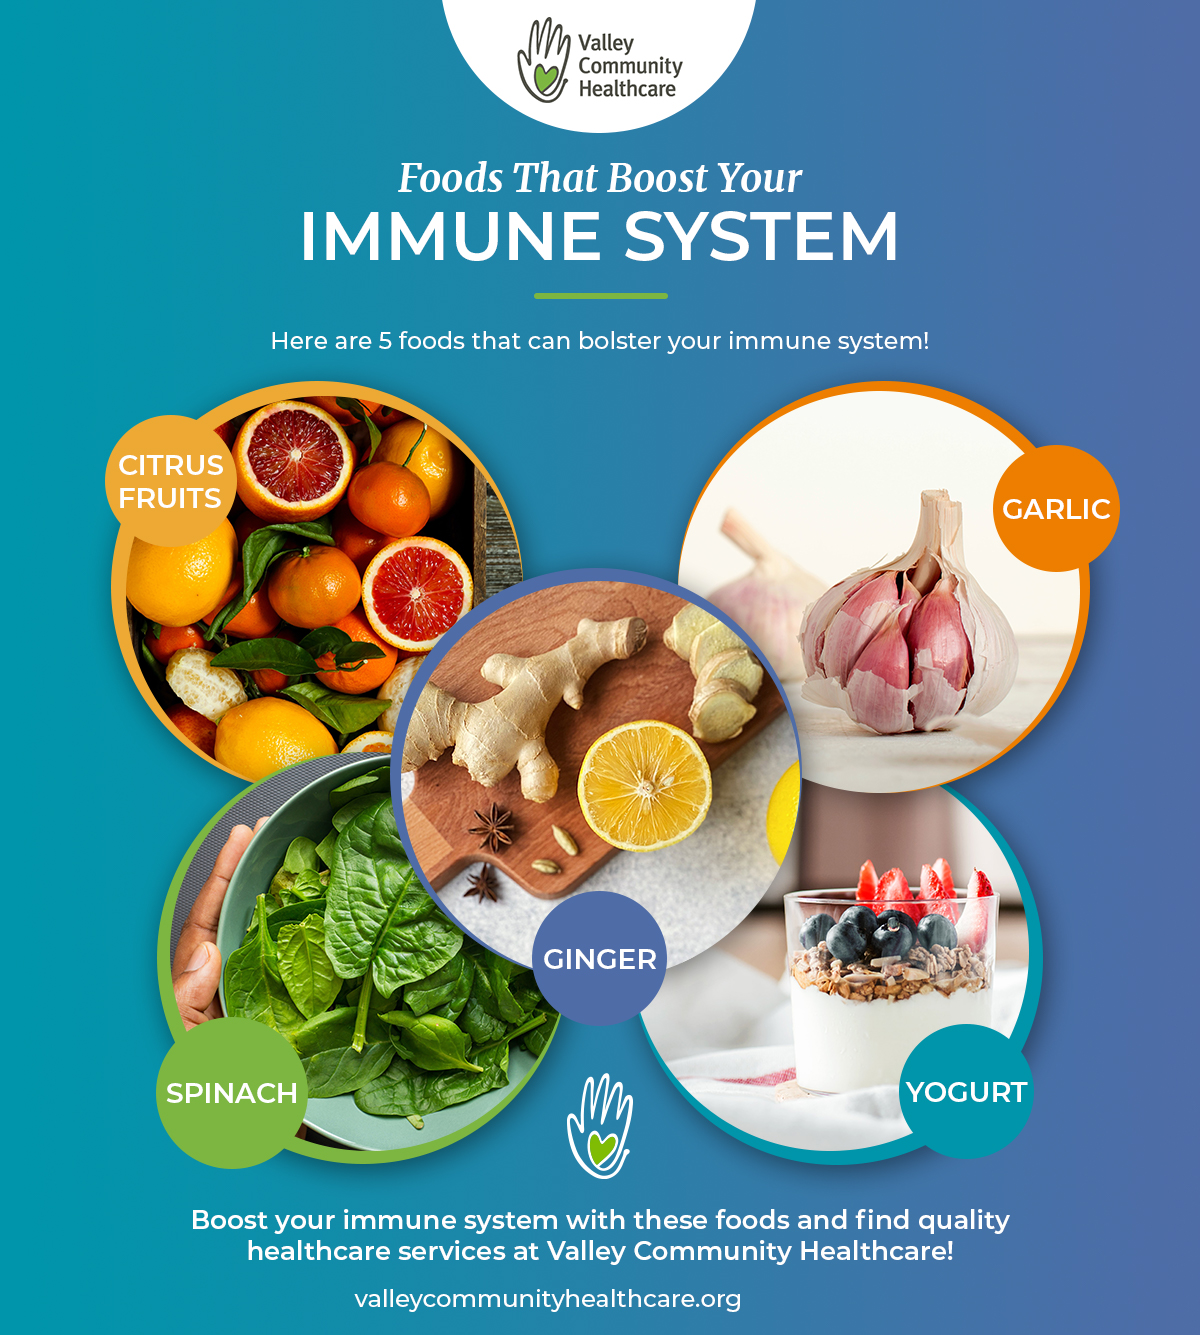 Boosting immune system capacity